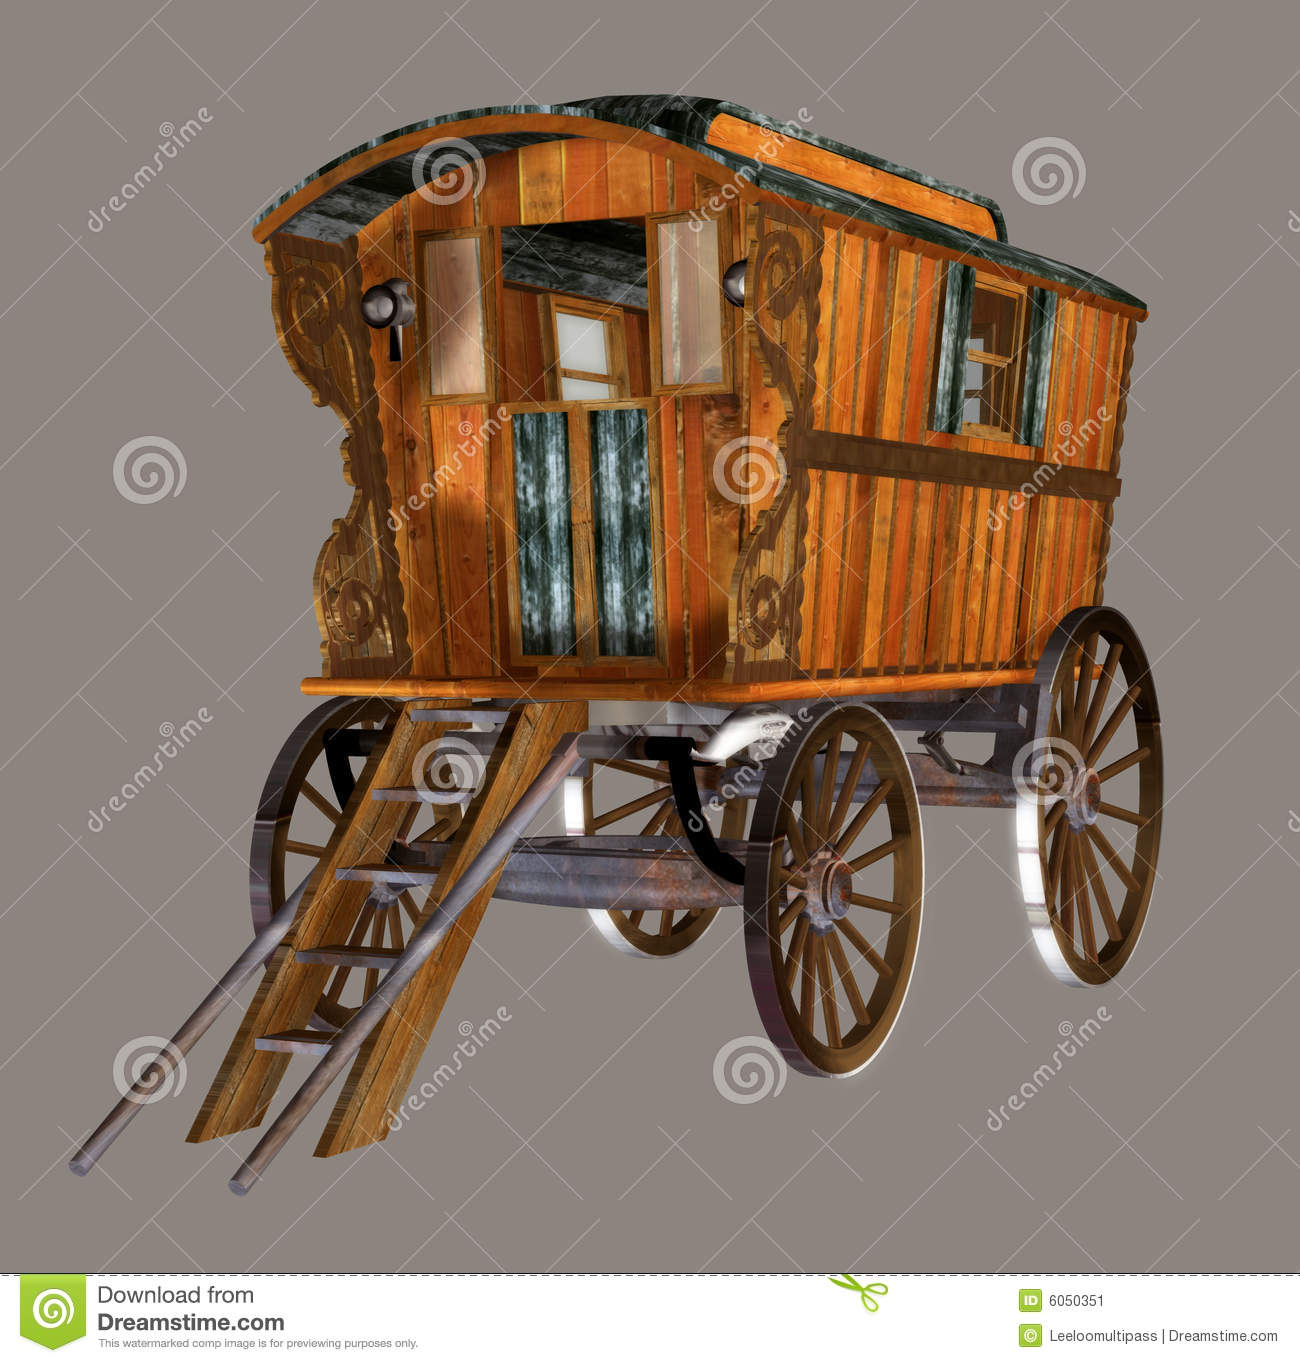 Gypsy Wagon Stock Image   Image  6050351